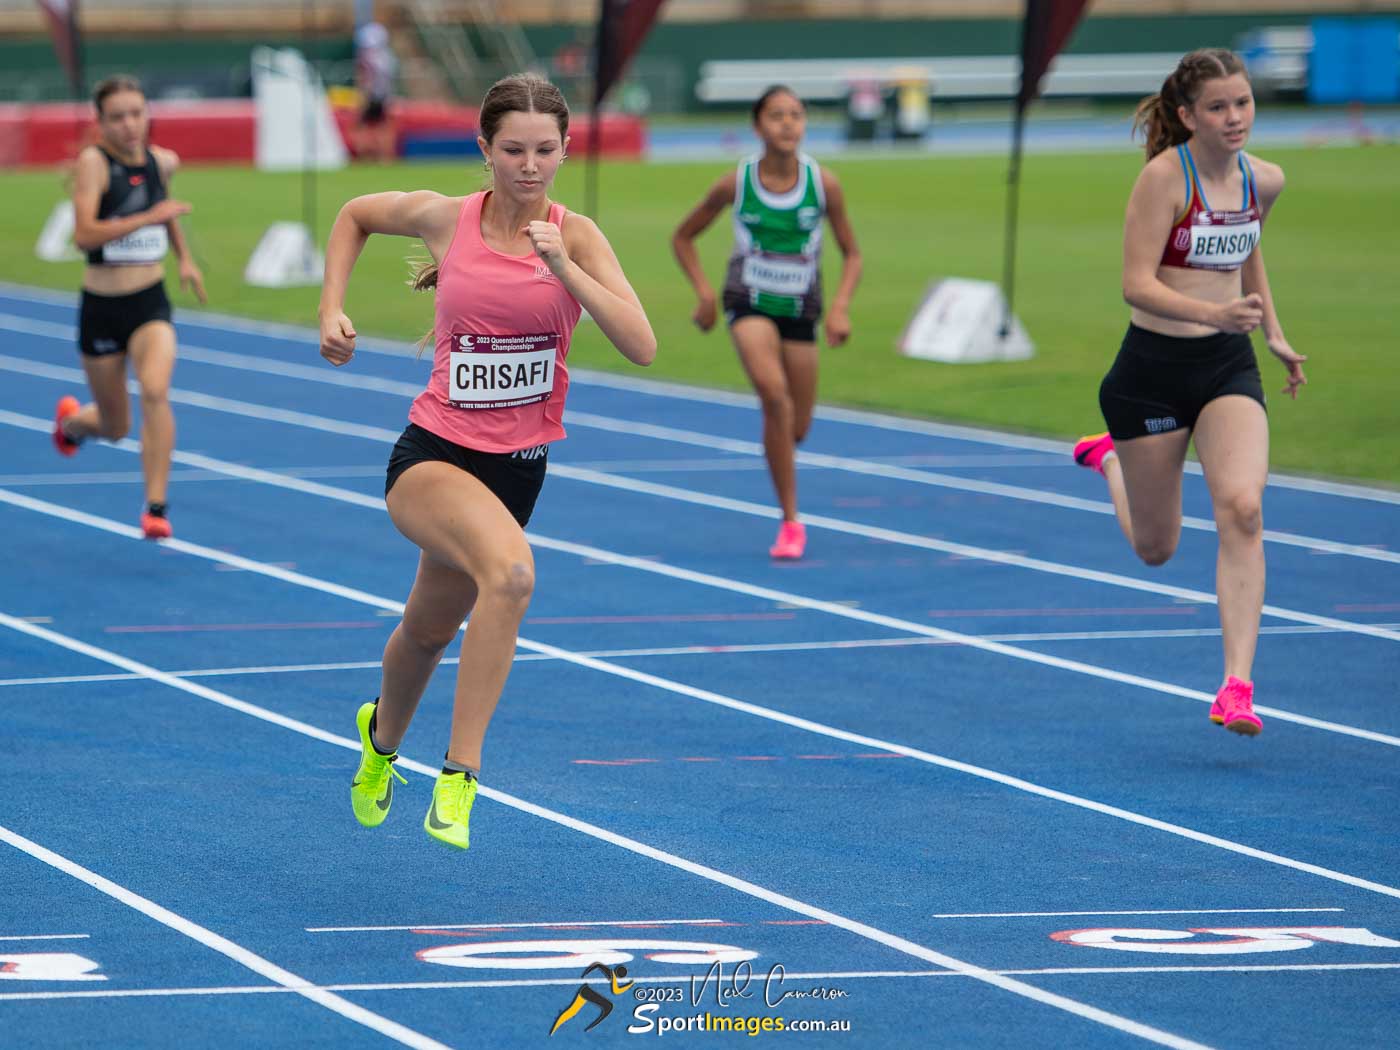 Lara Crisafi, Pepper Jane Benson, Girls 100m Under 14 Heat 2